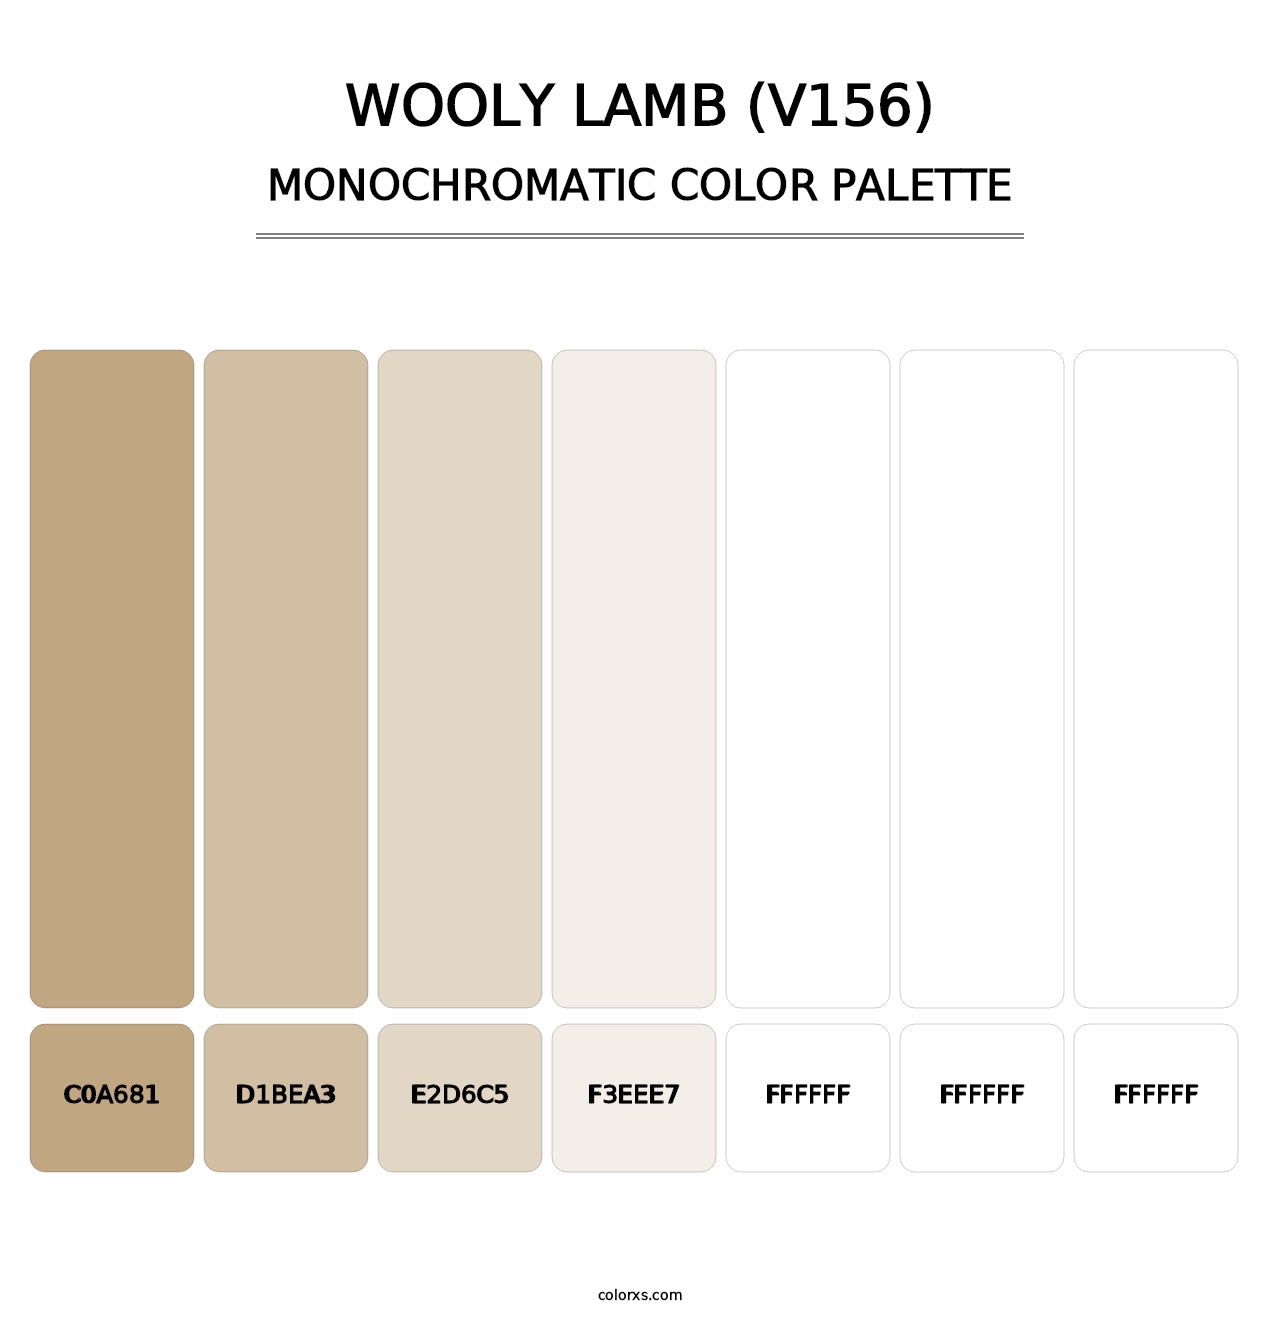 Wooly Lamb (V156) - Monochromatic Color Palette